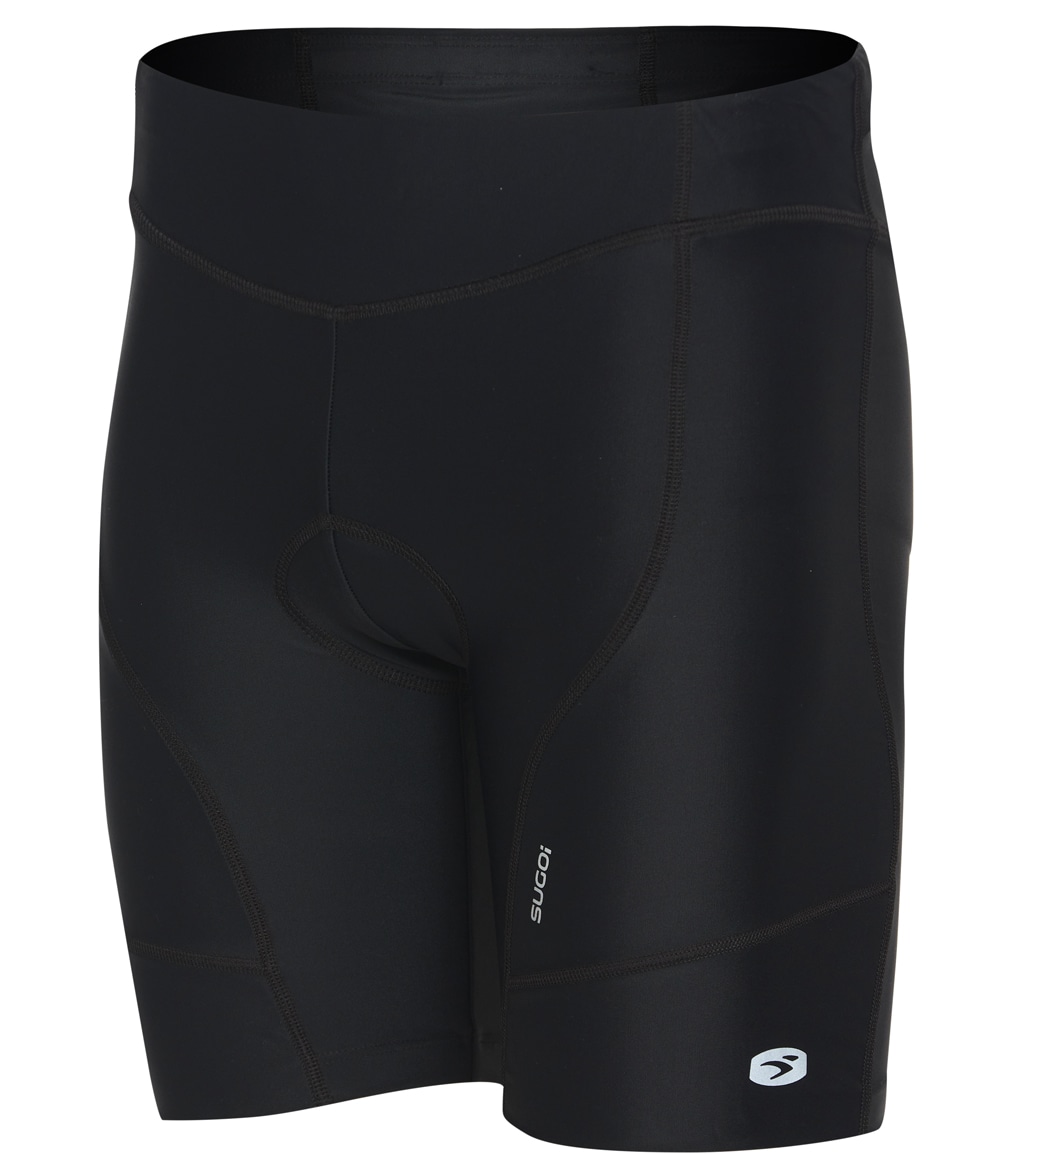 Sugoi Men's Rpm Tri Shorts - Black Large - Swimoutlet.com